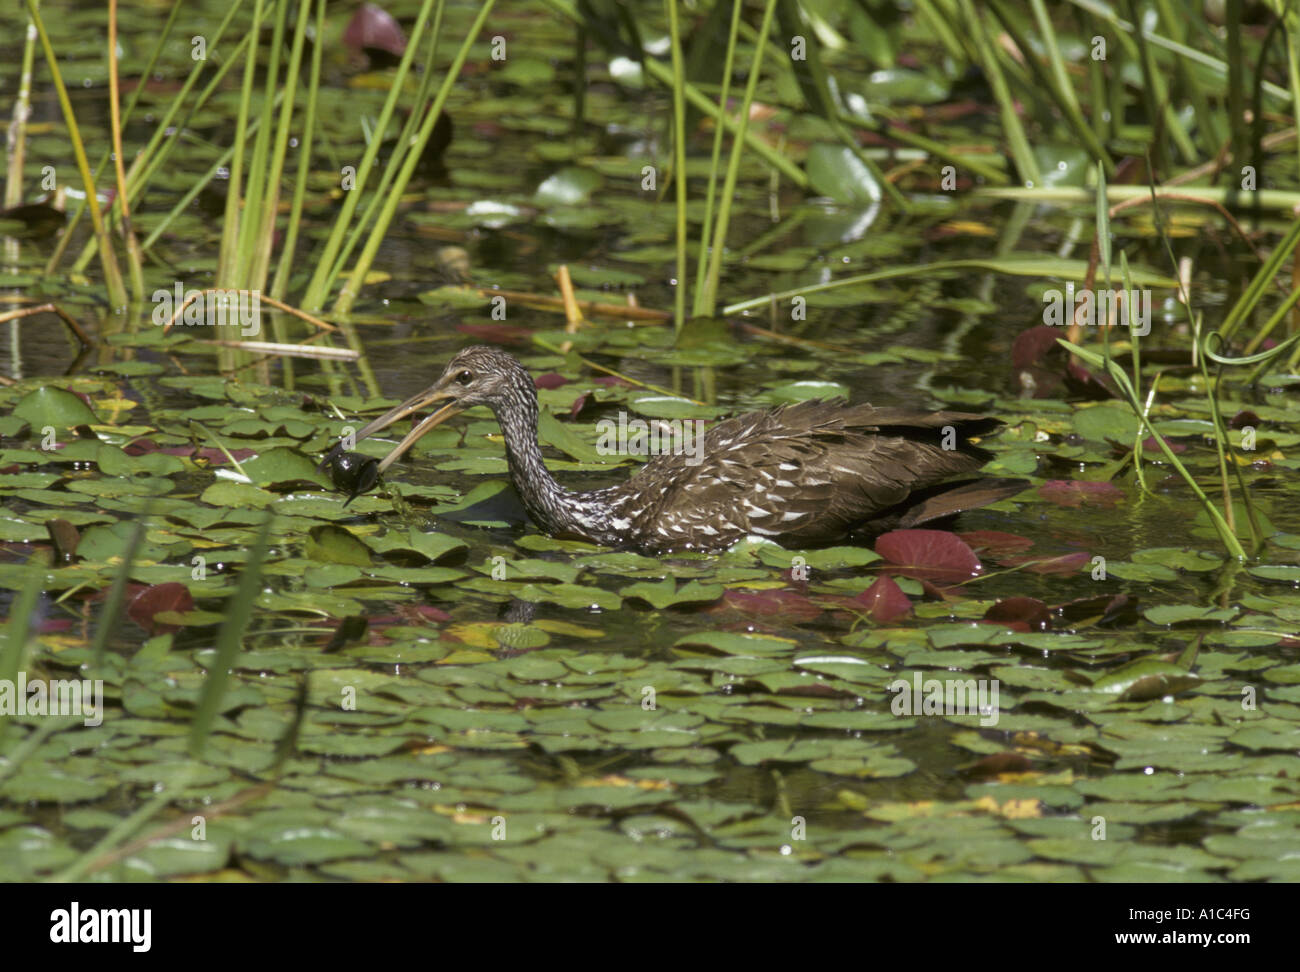 Aramus guarauna Limpkin vadeando en el agua con caracoles Florida Foto de stock